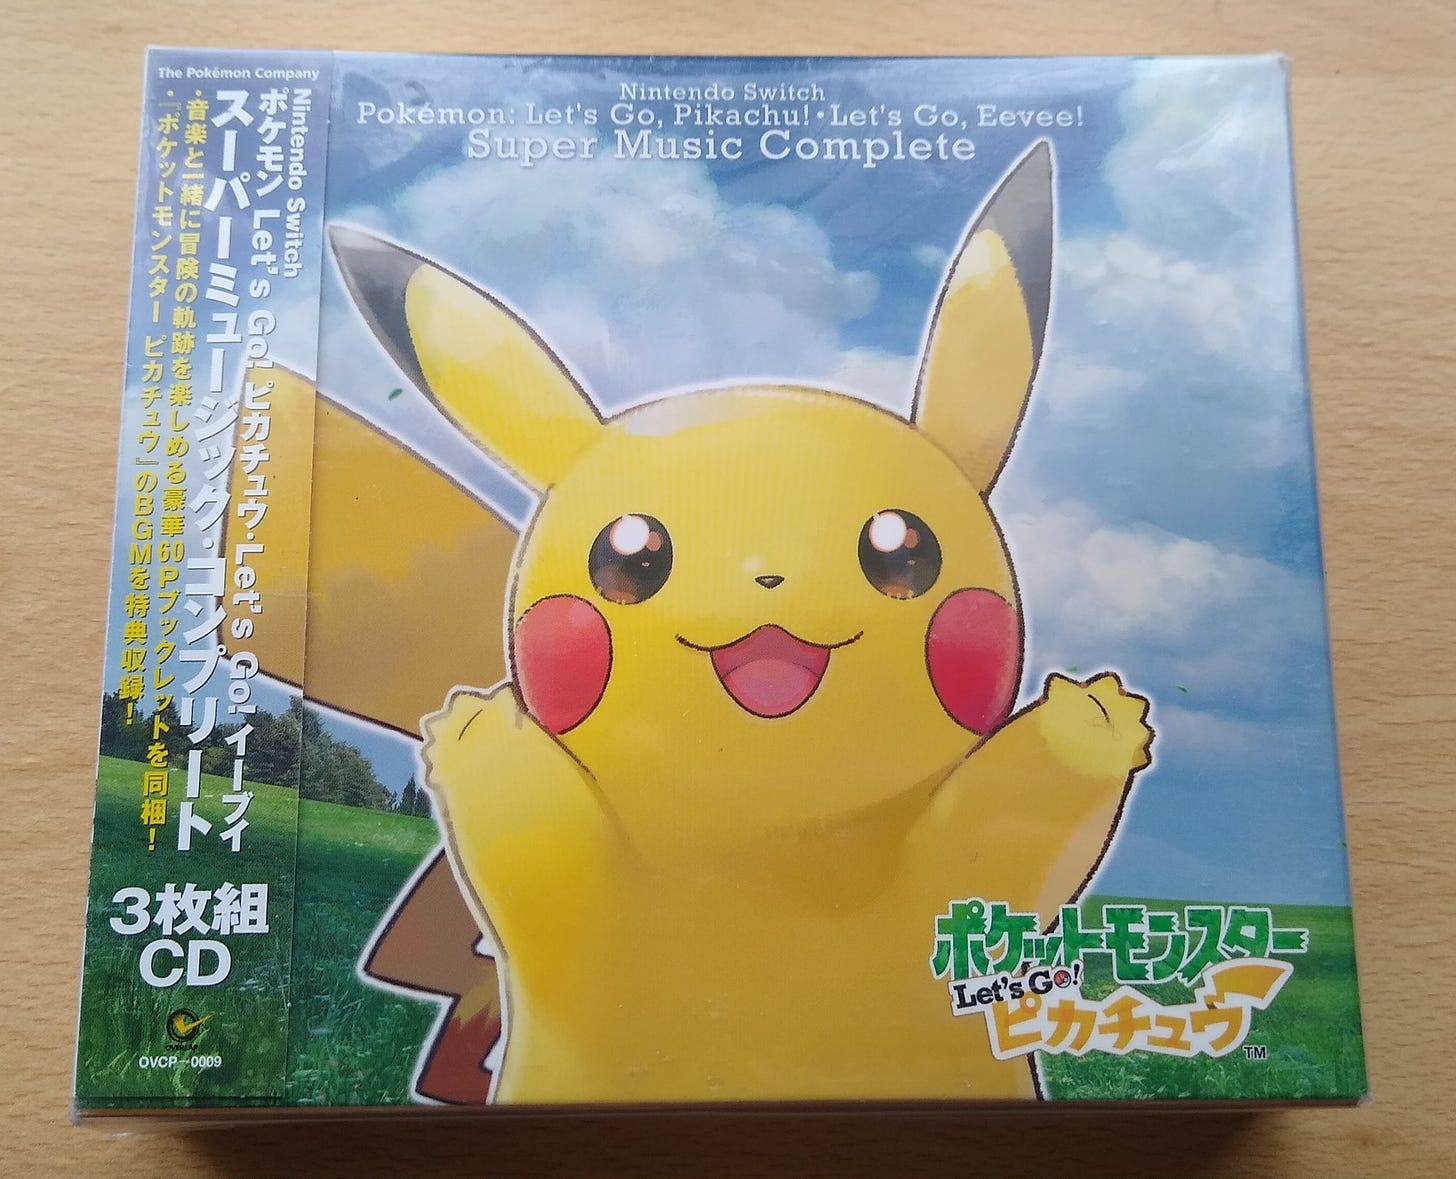 Pokémon: Let's Go, Pikachu! & Let's Go, Eevee! Super Music Complete was released on Dec 1st, 2018